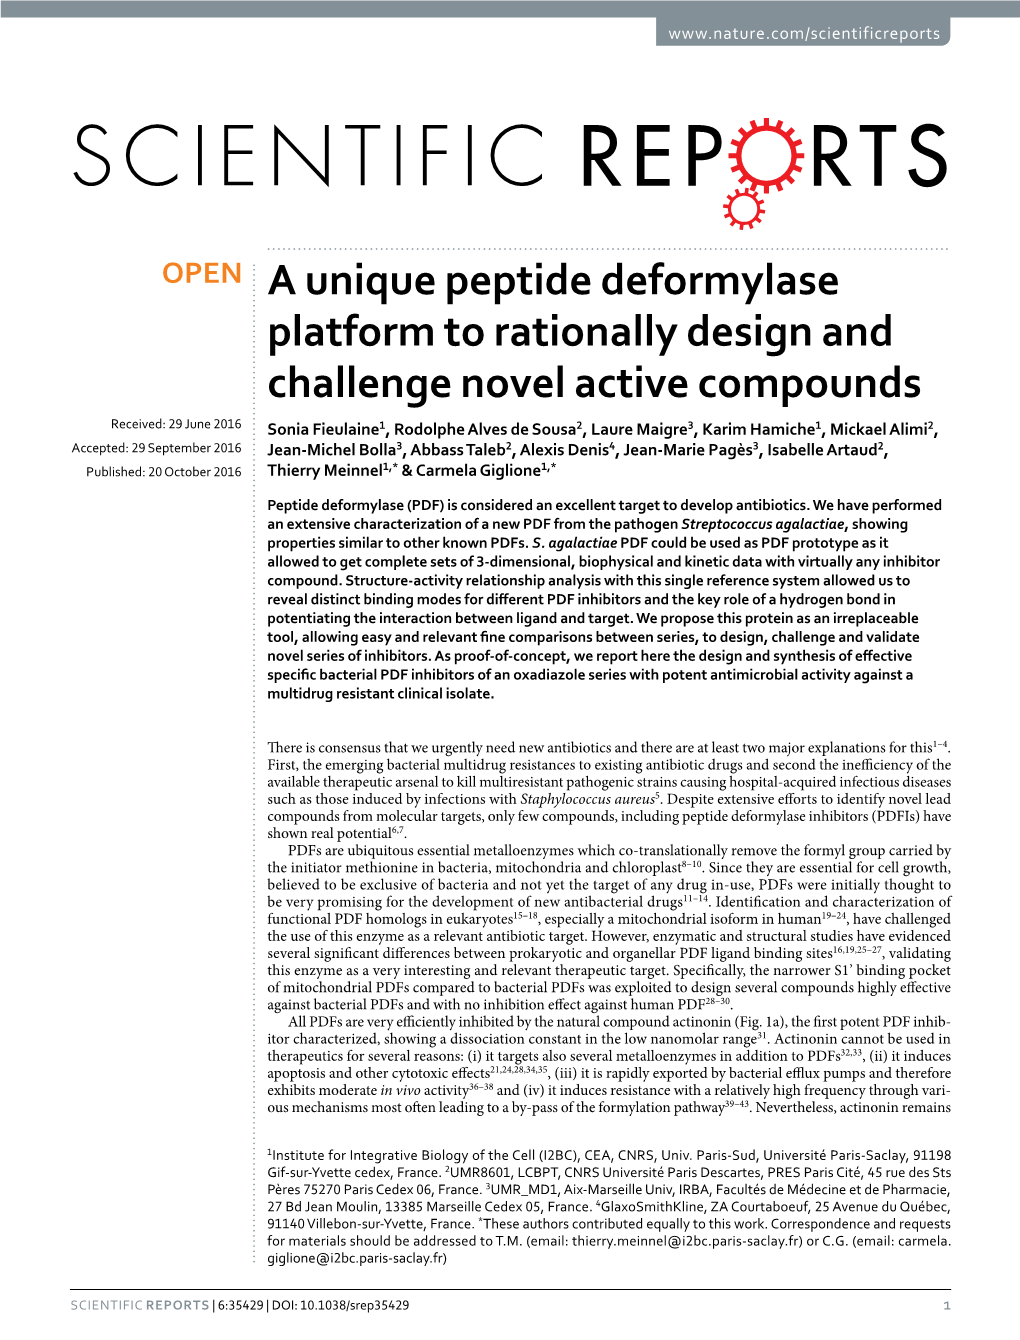 A Unique Peptide Deformylase Platform to Rationally